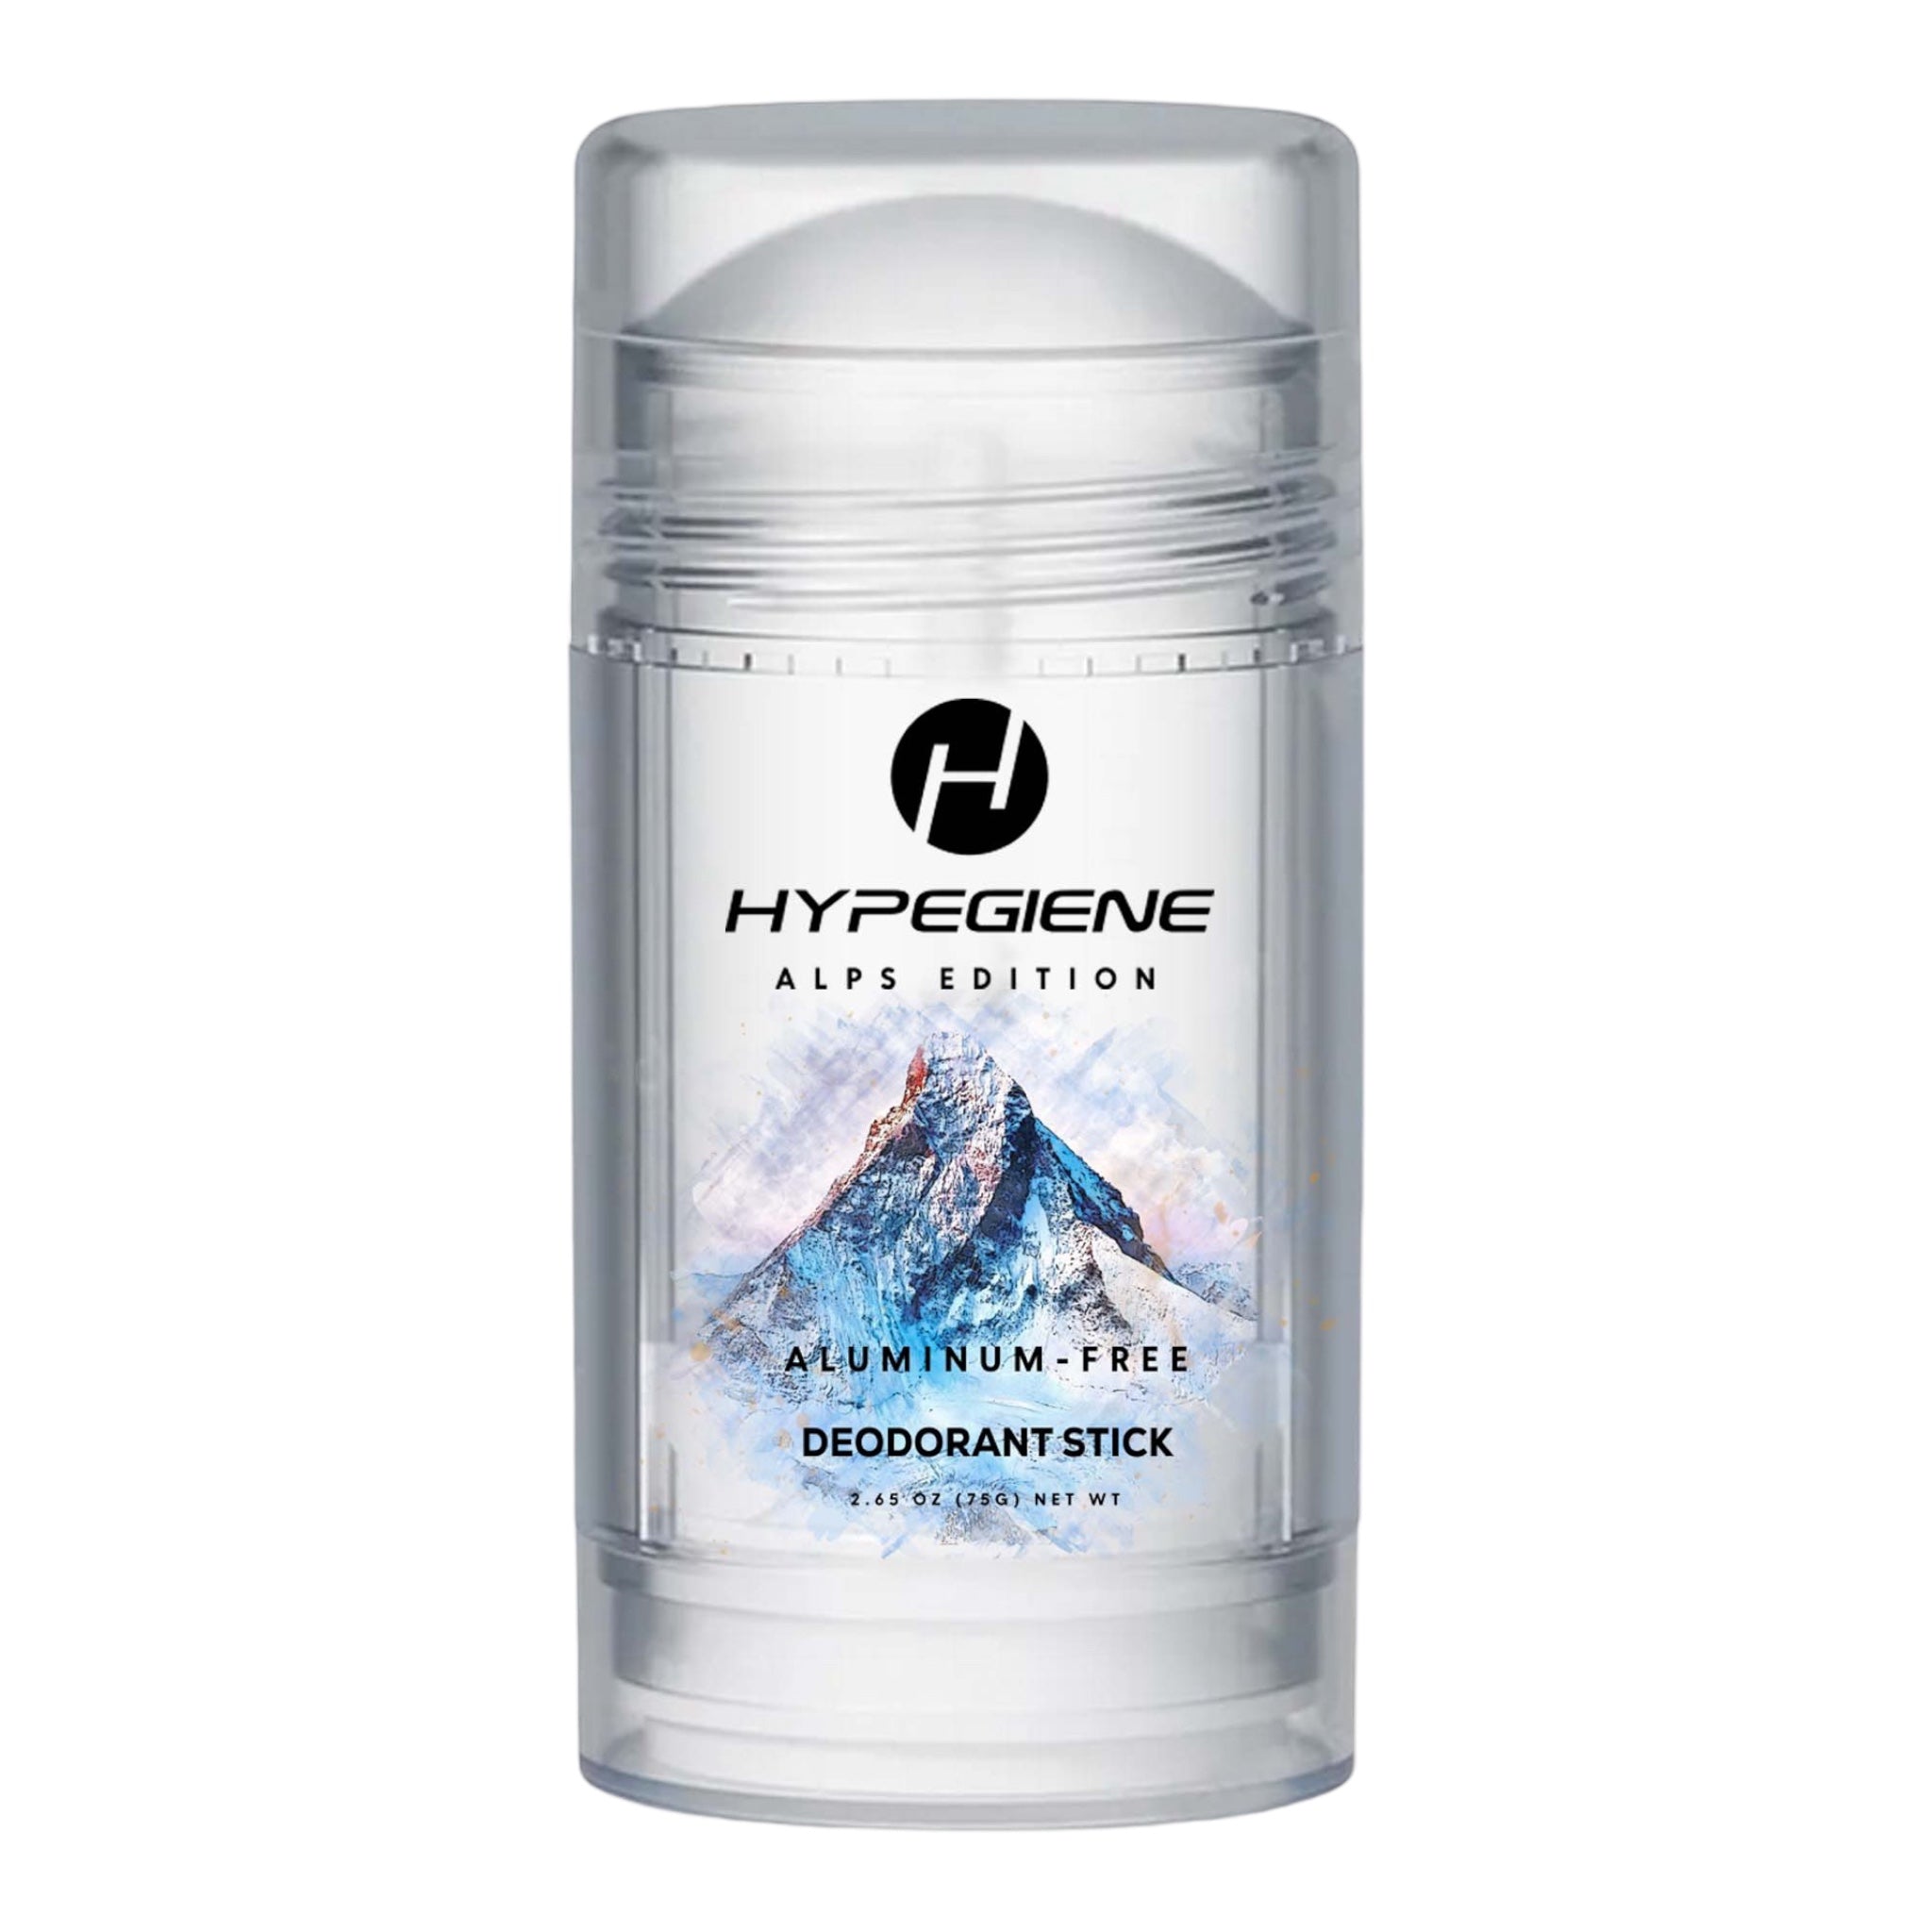 Hypegiene Alps Edition Deodorant Stick